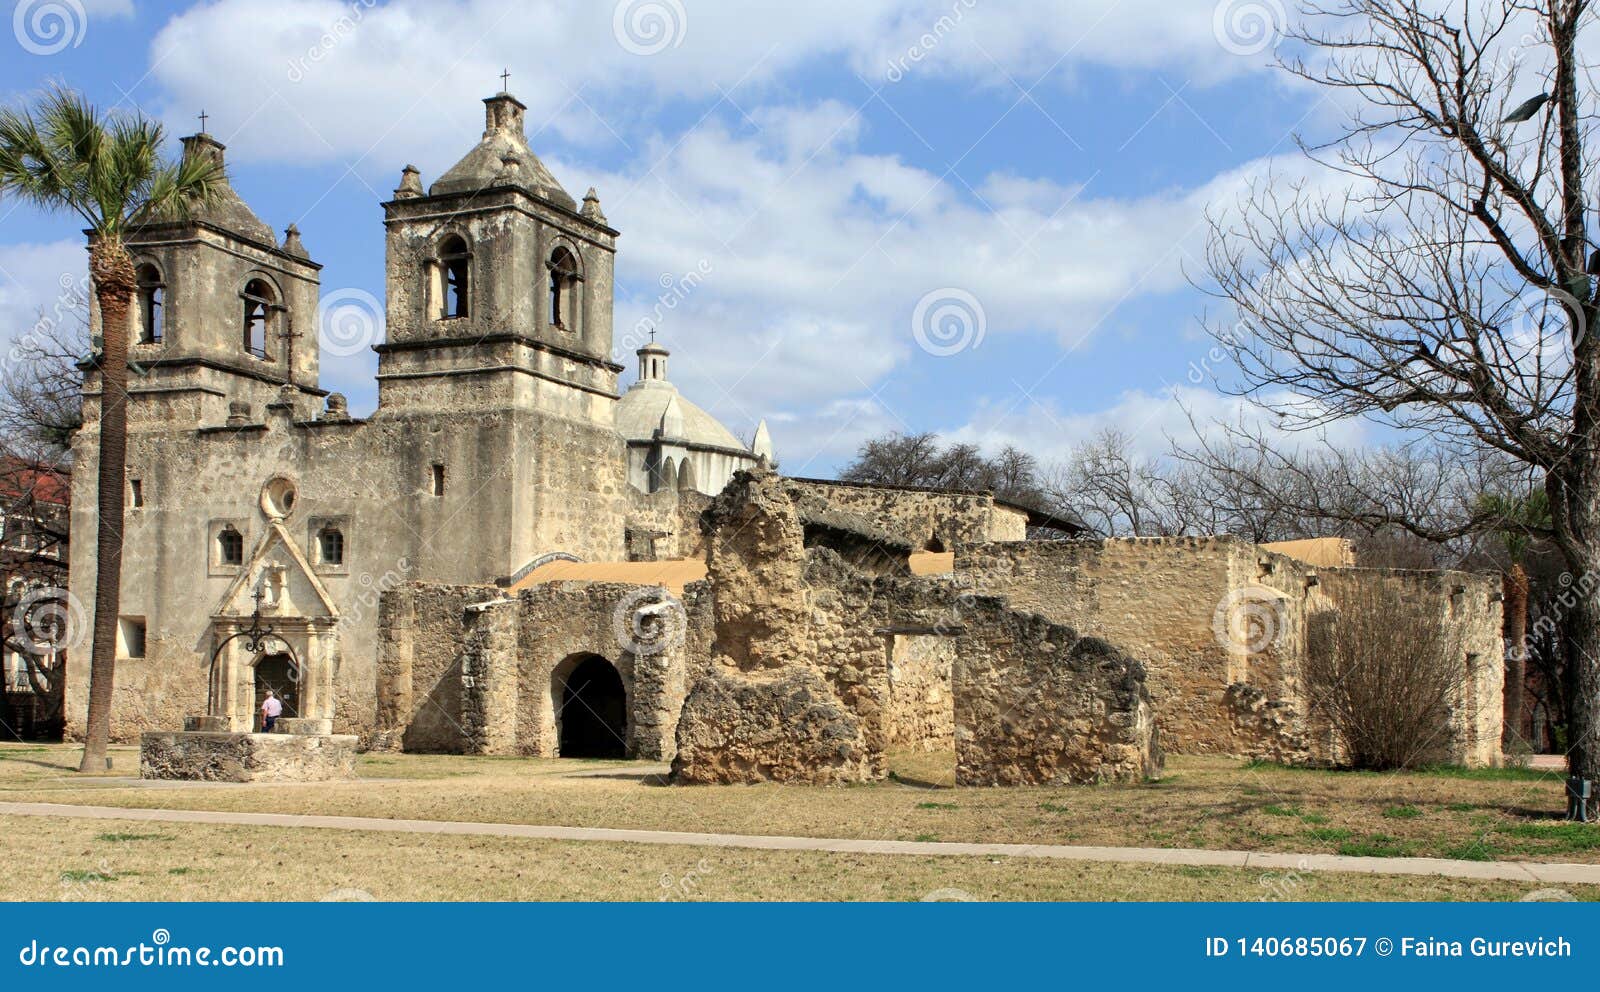 San Antonio Missions National Historical Park Parking